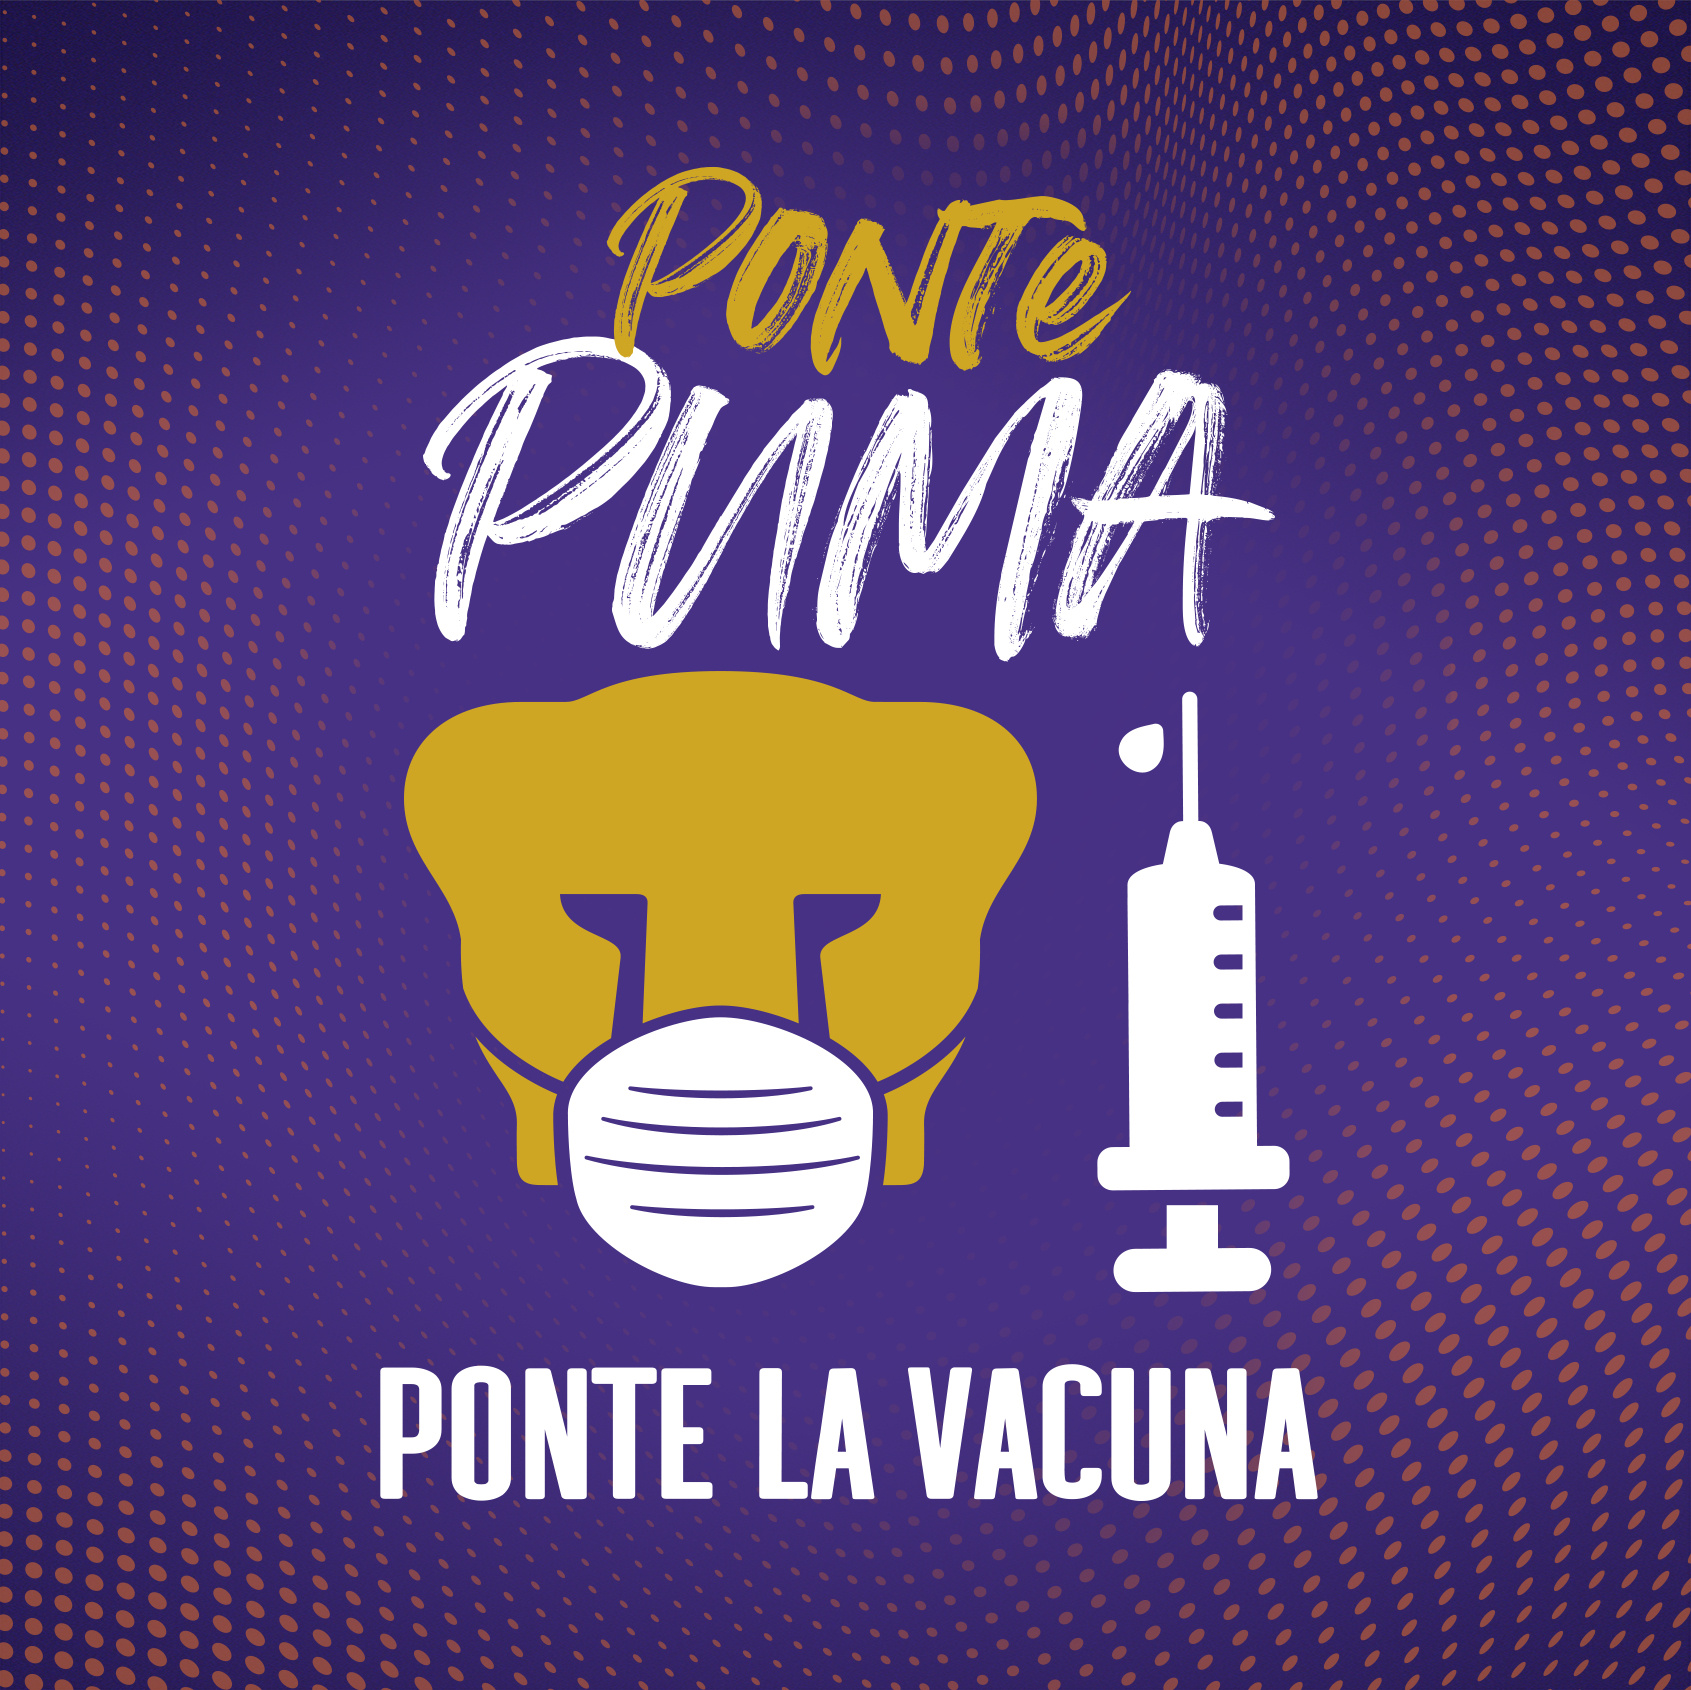 Campaa institucional Ponte Puma Ponte la Vacuna.